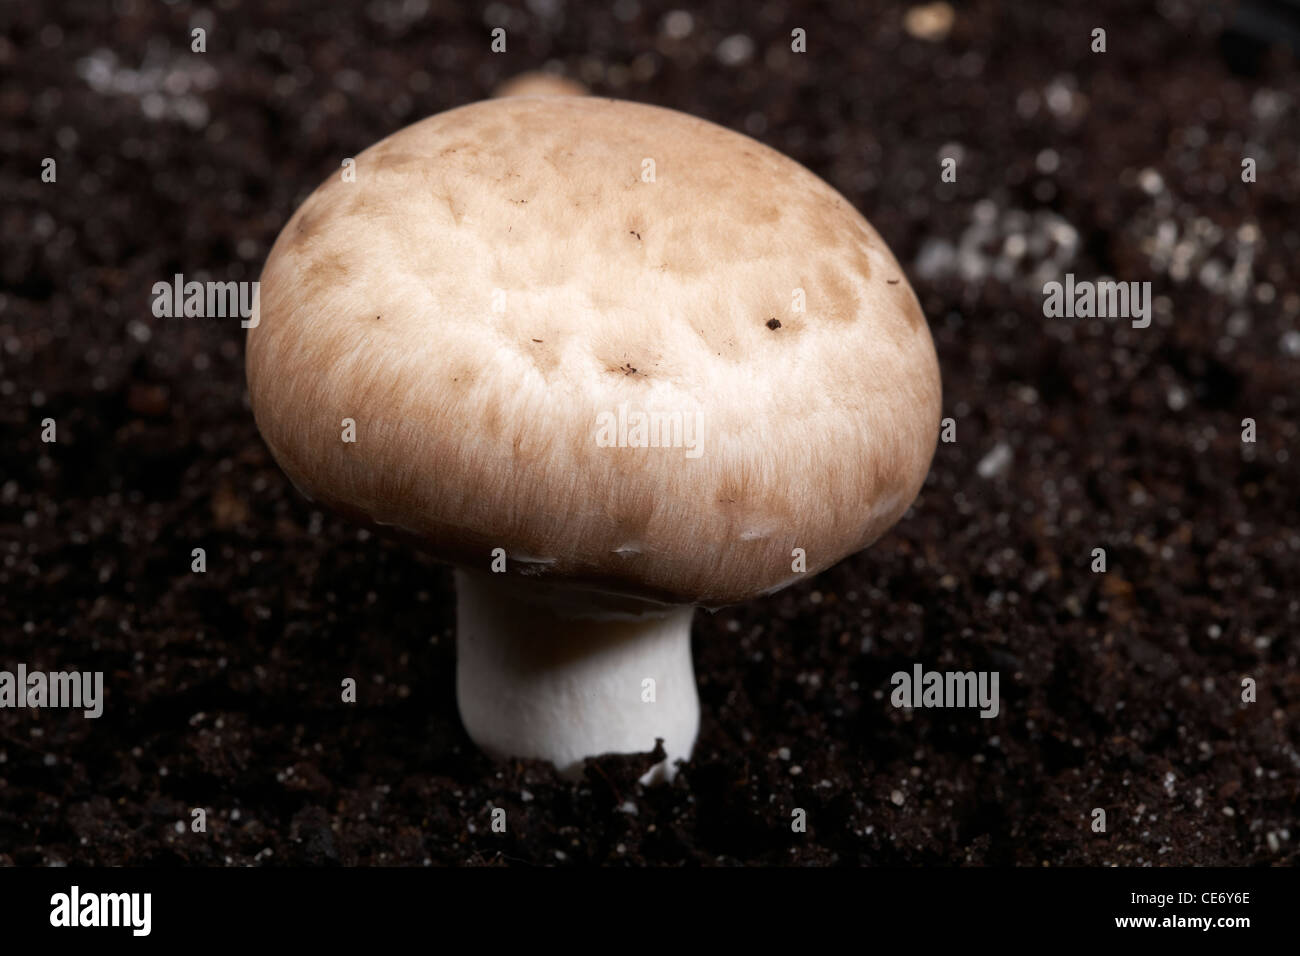 Chestnut Mushroom Growing on Compost Growth Medium Stock Photo